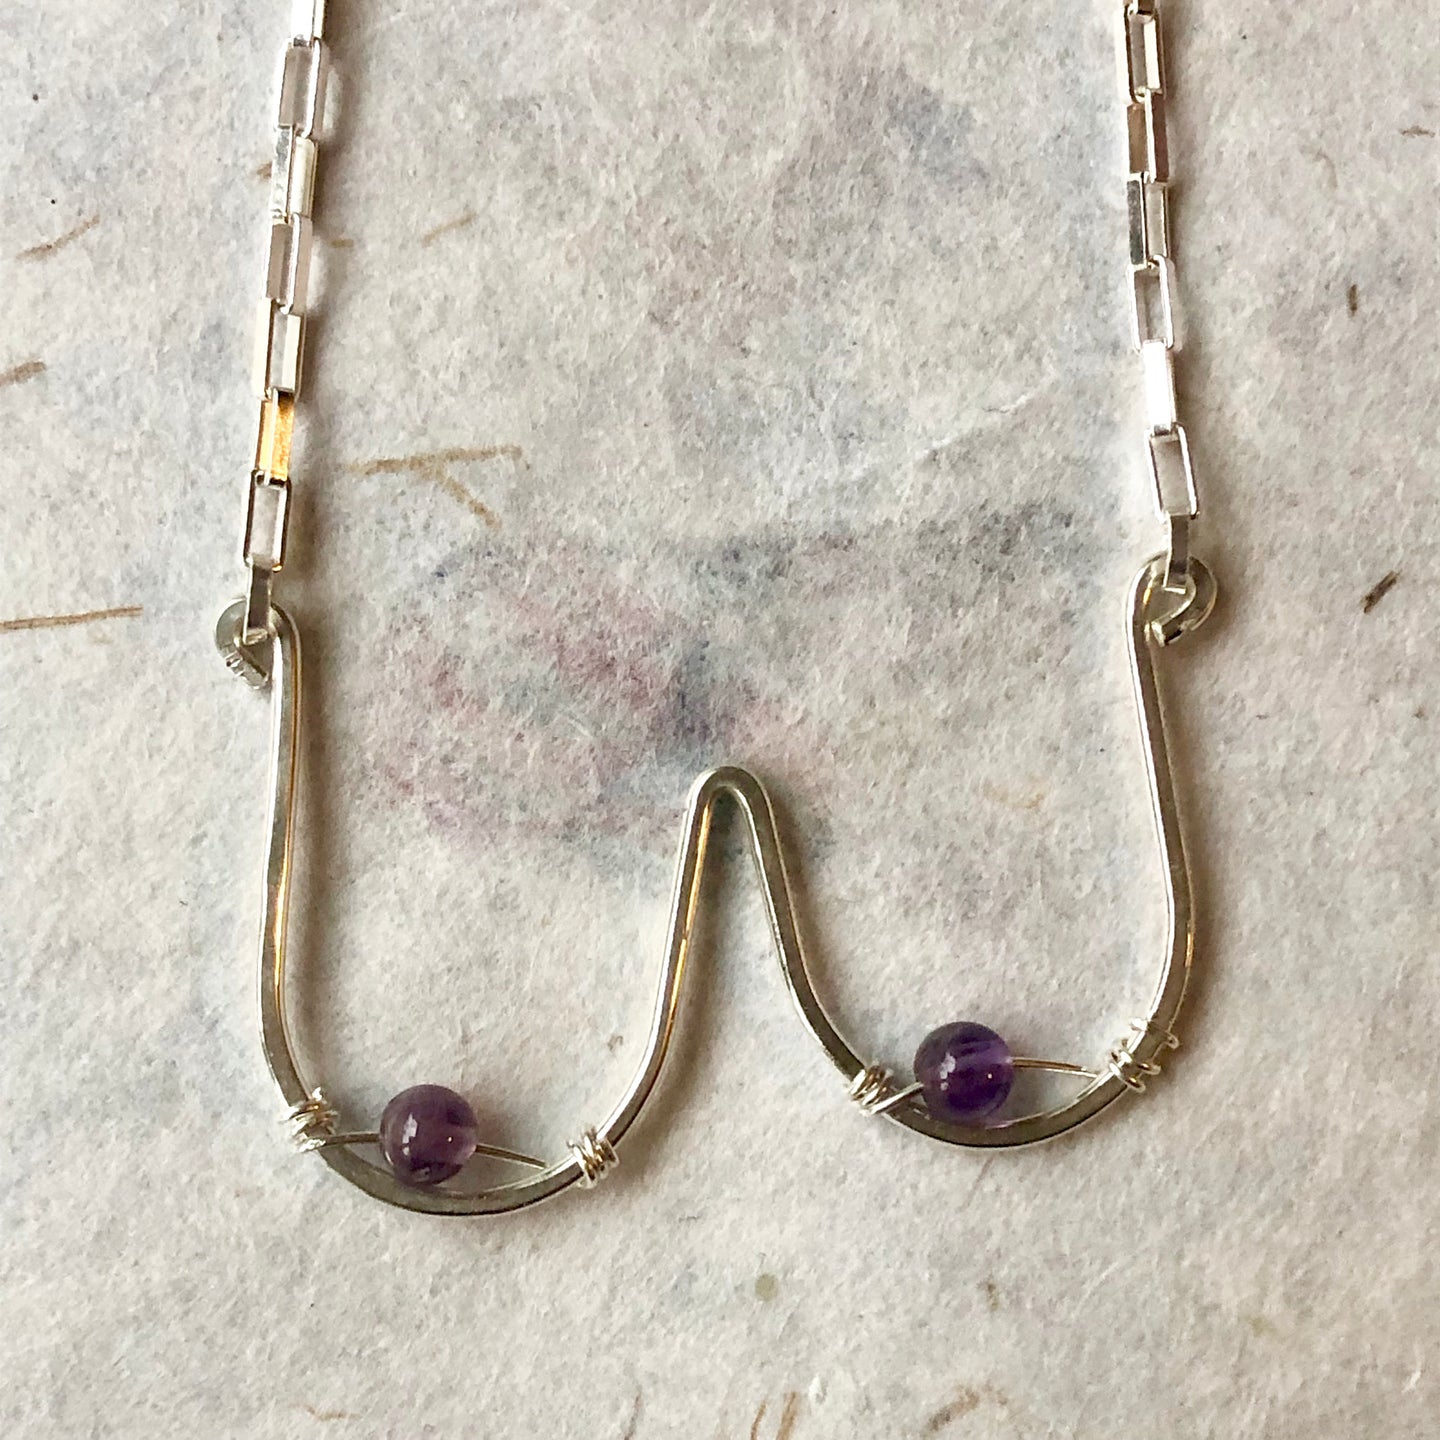 'Femme' halskæde i sølv med lilla perler